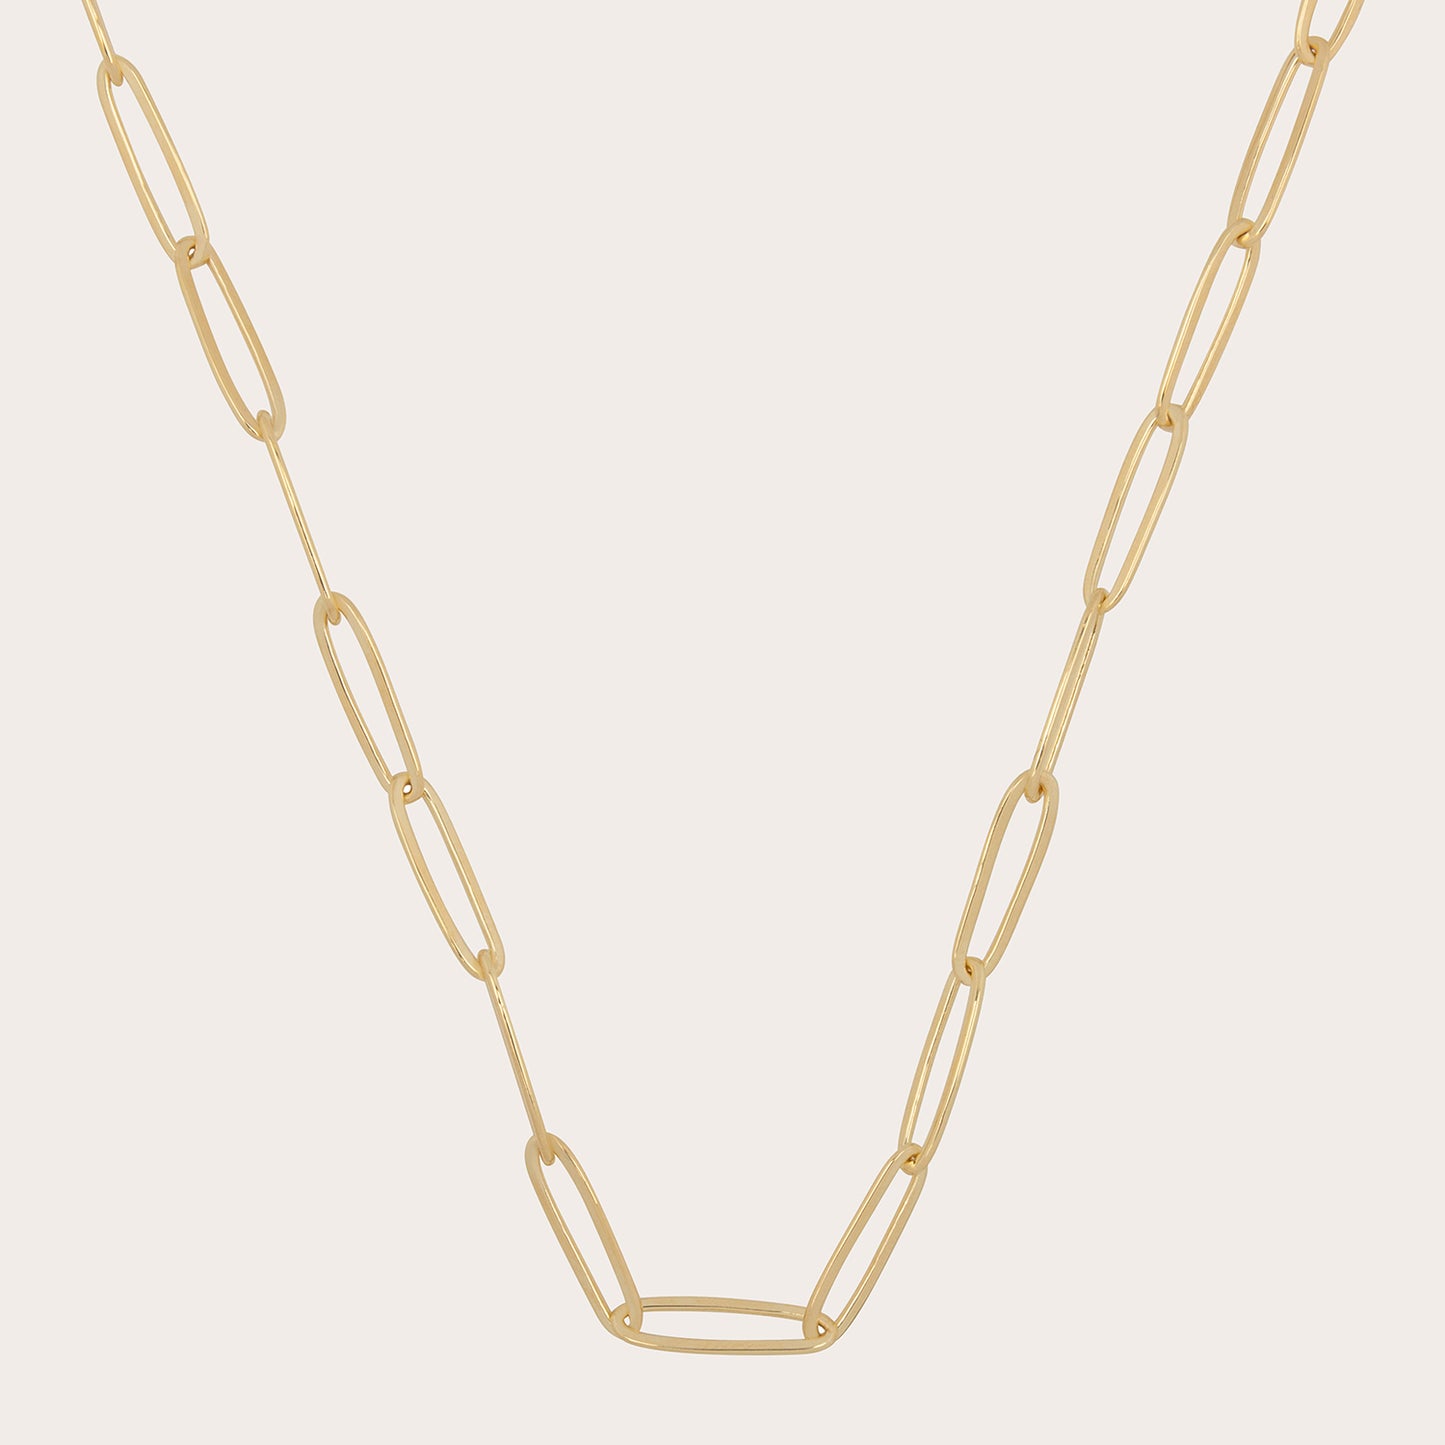 Diana necklace